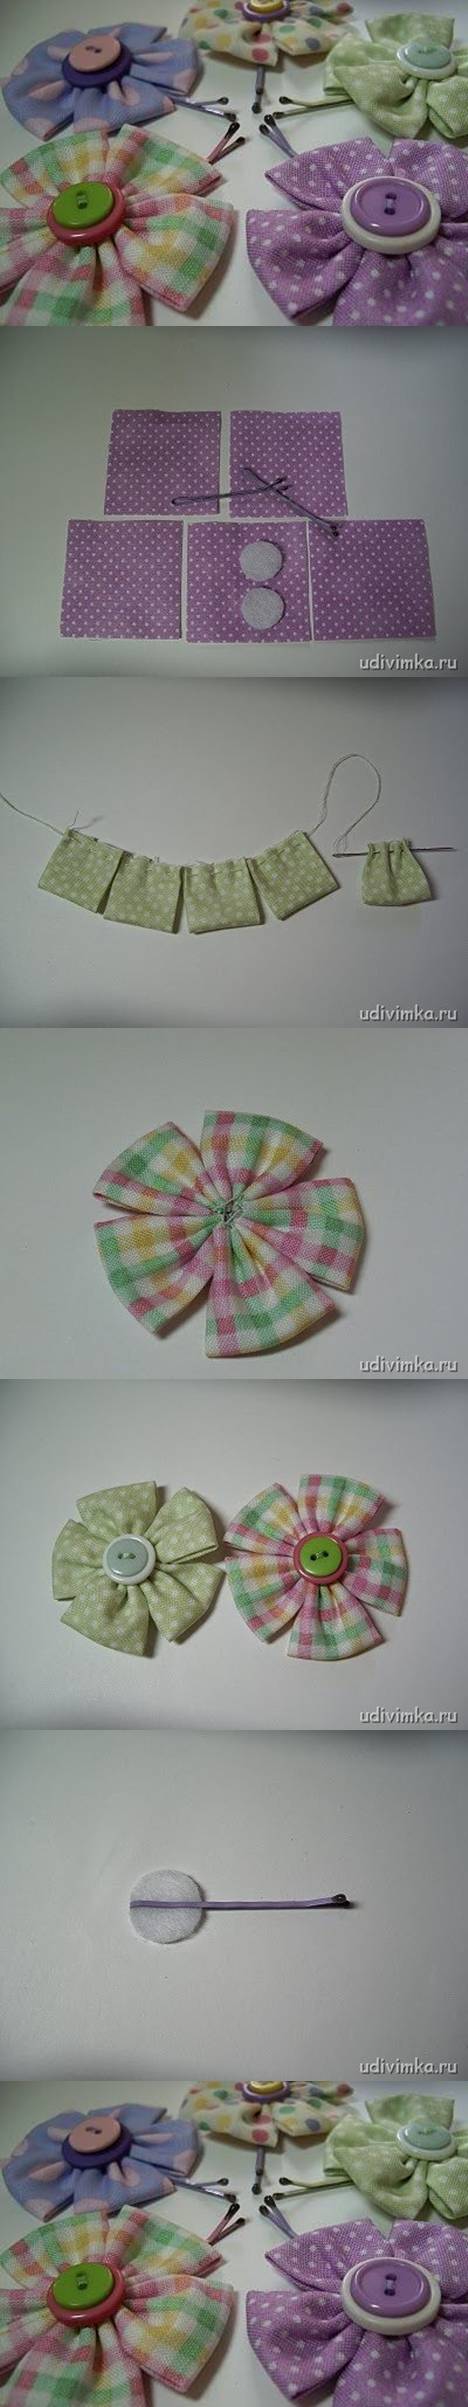 diy-cute-fabric-flower-hairpin DIY Step by Step Fabric Flowers